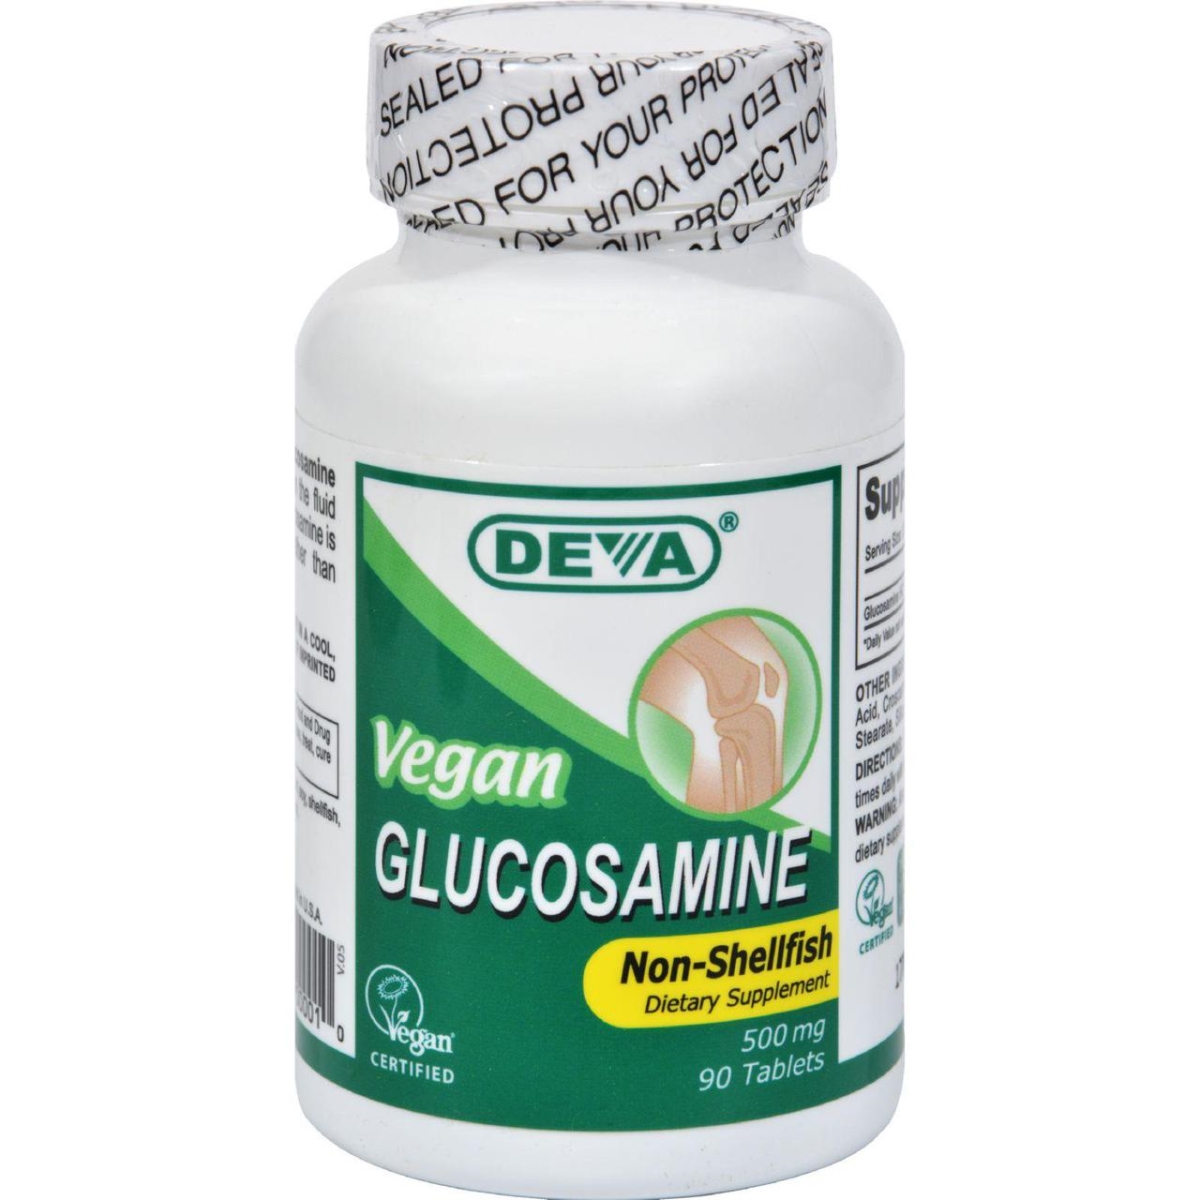 Hg0107334 500 Mg Glucosamine, 90 Tablets